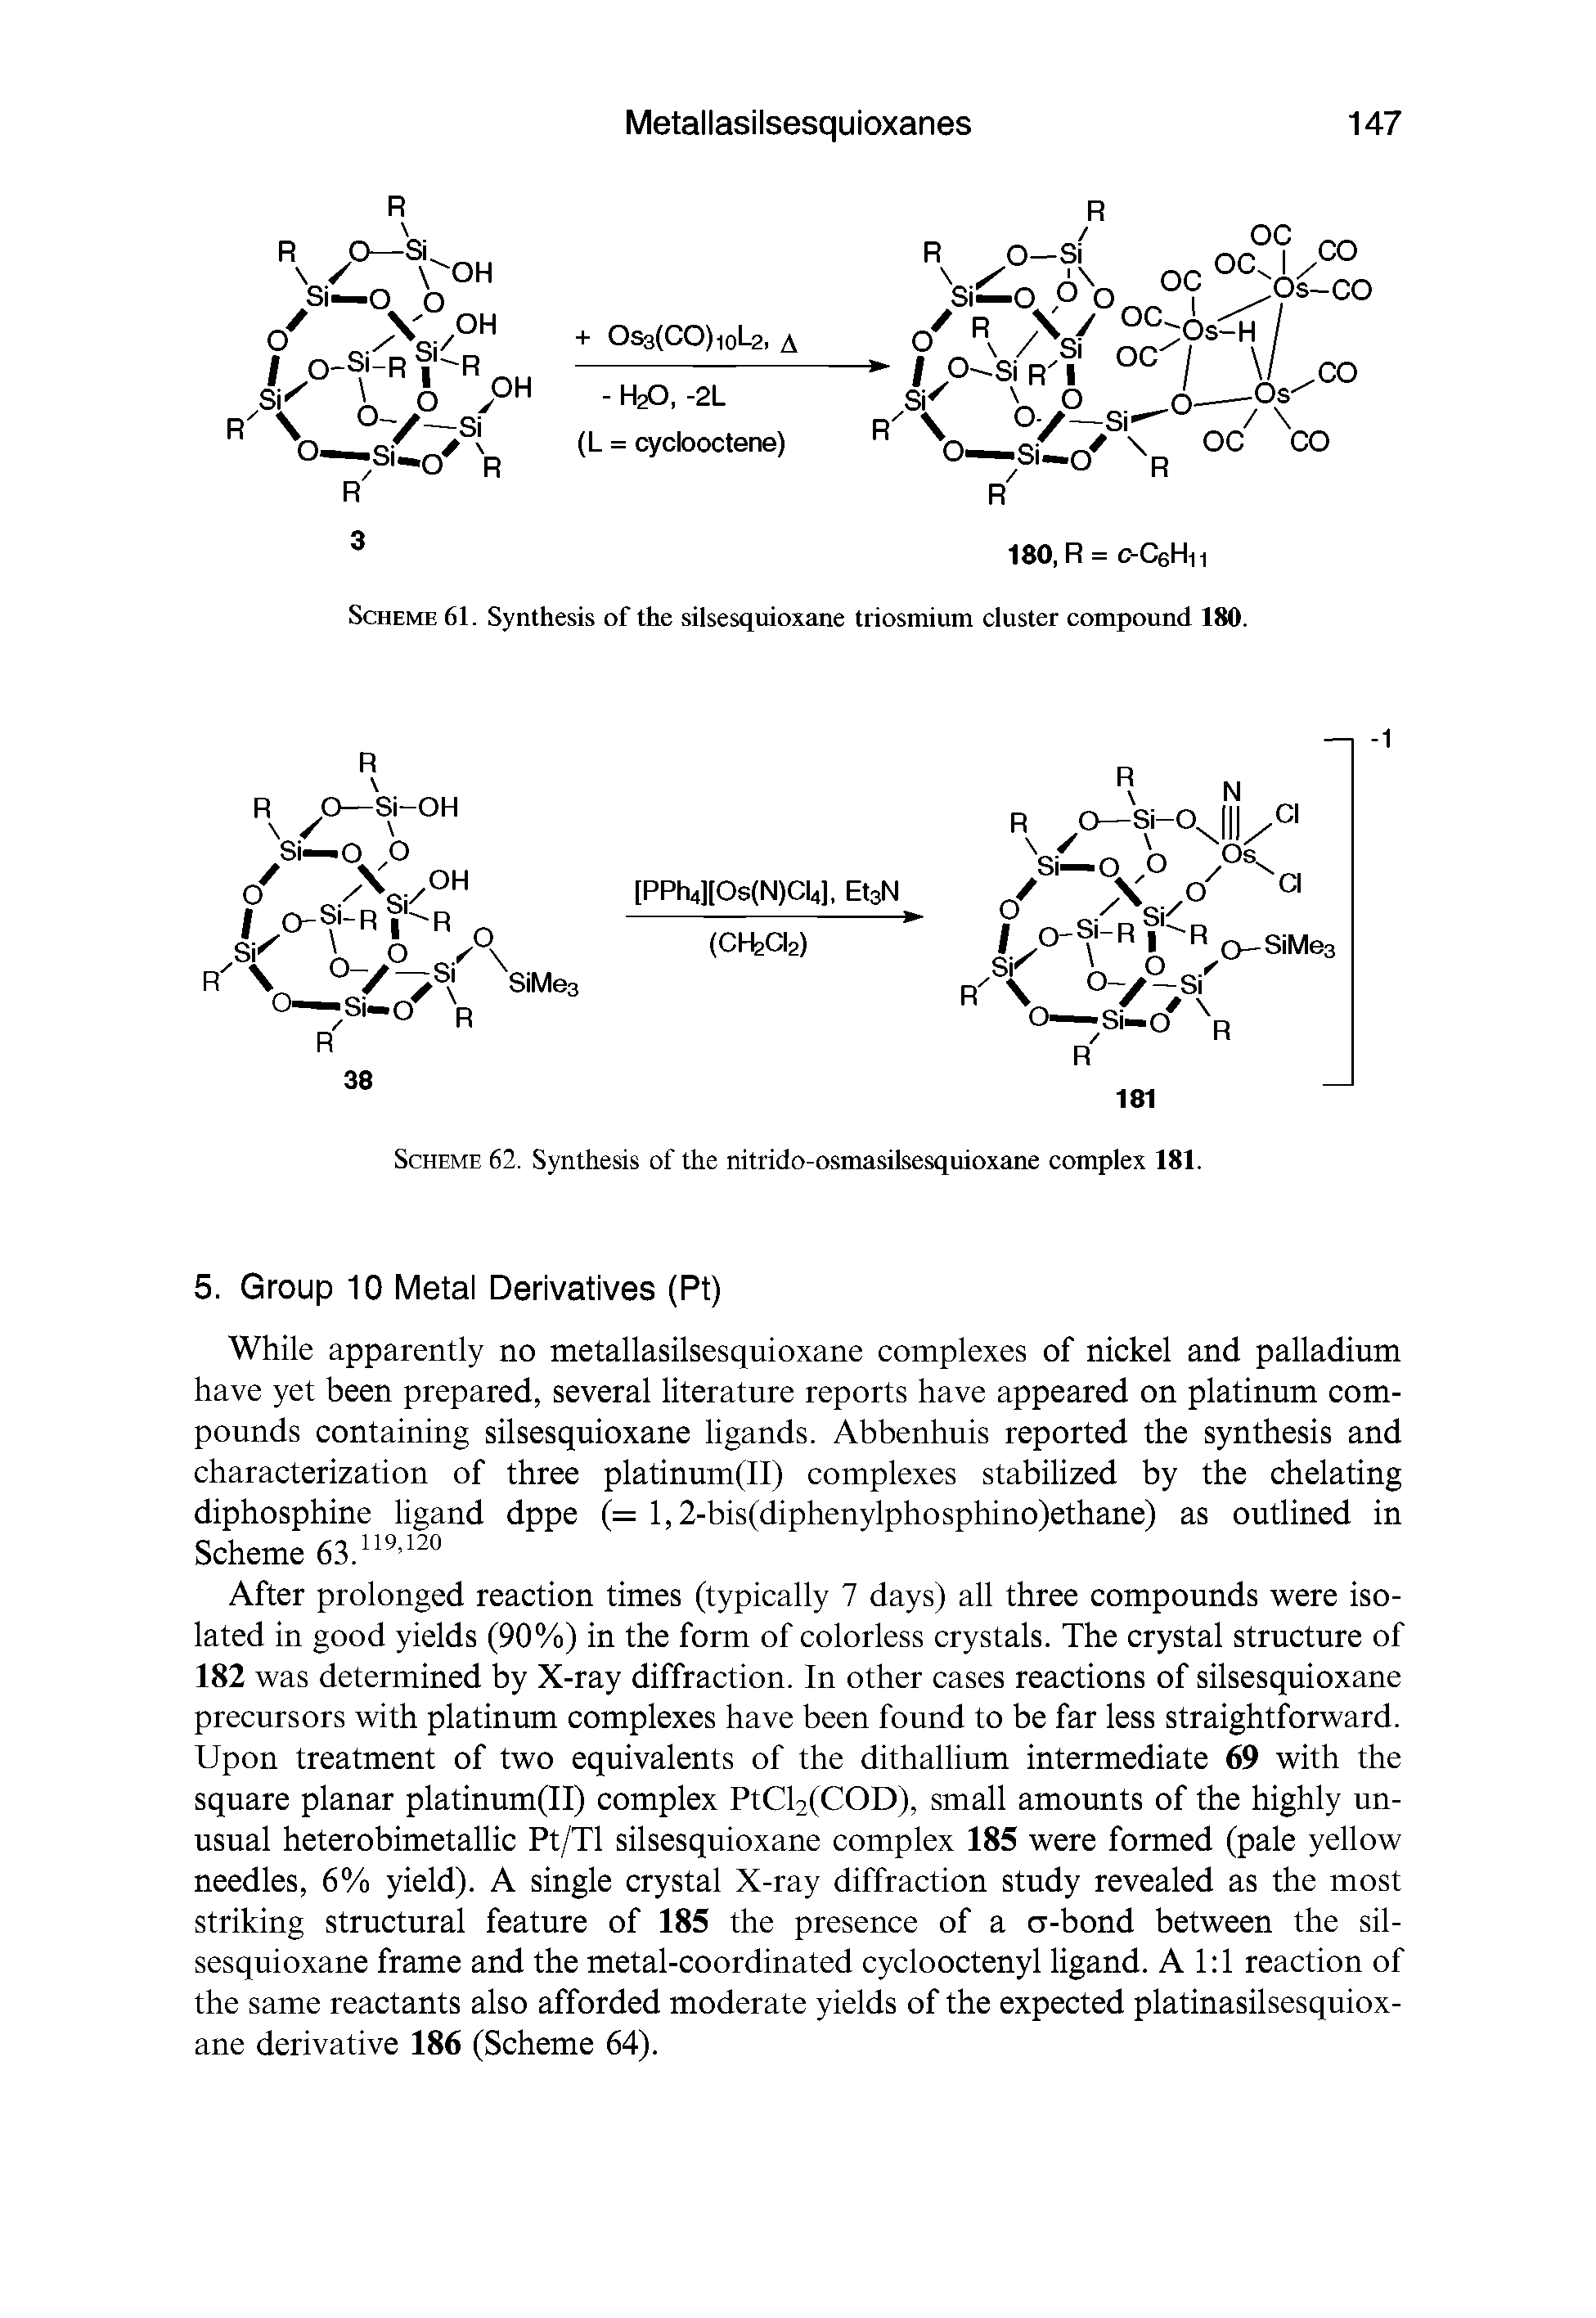 Scheme 61. Synthesis of the silsesquioxane triosmium cluster compound 180.